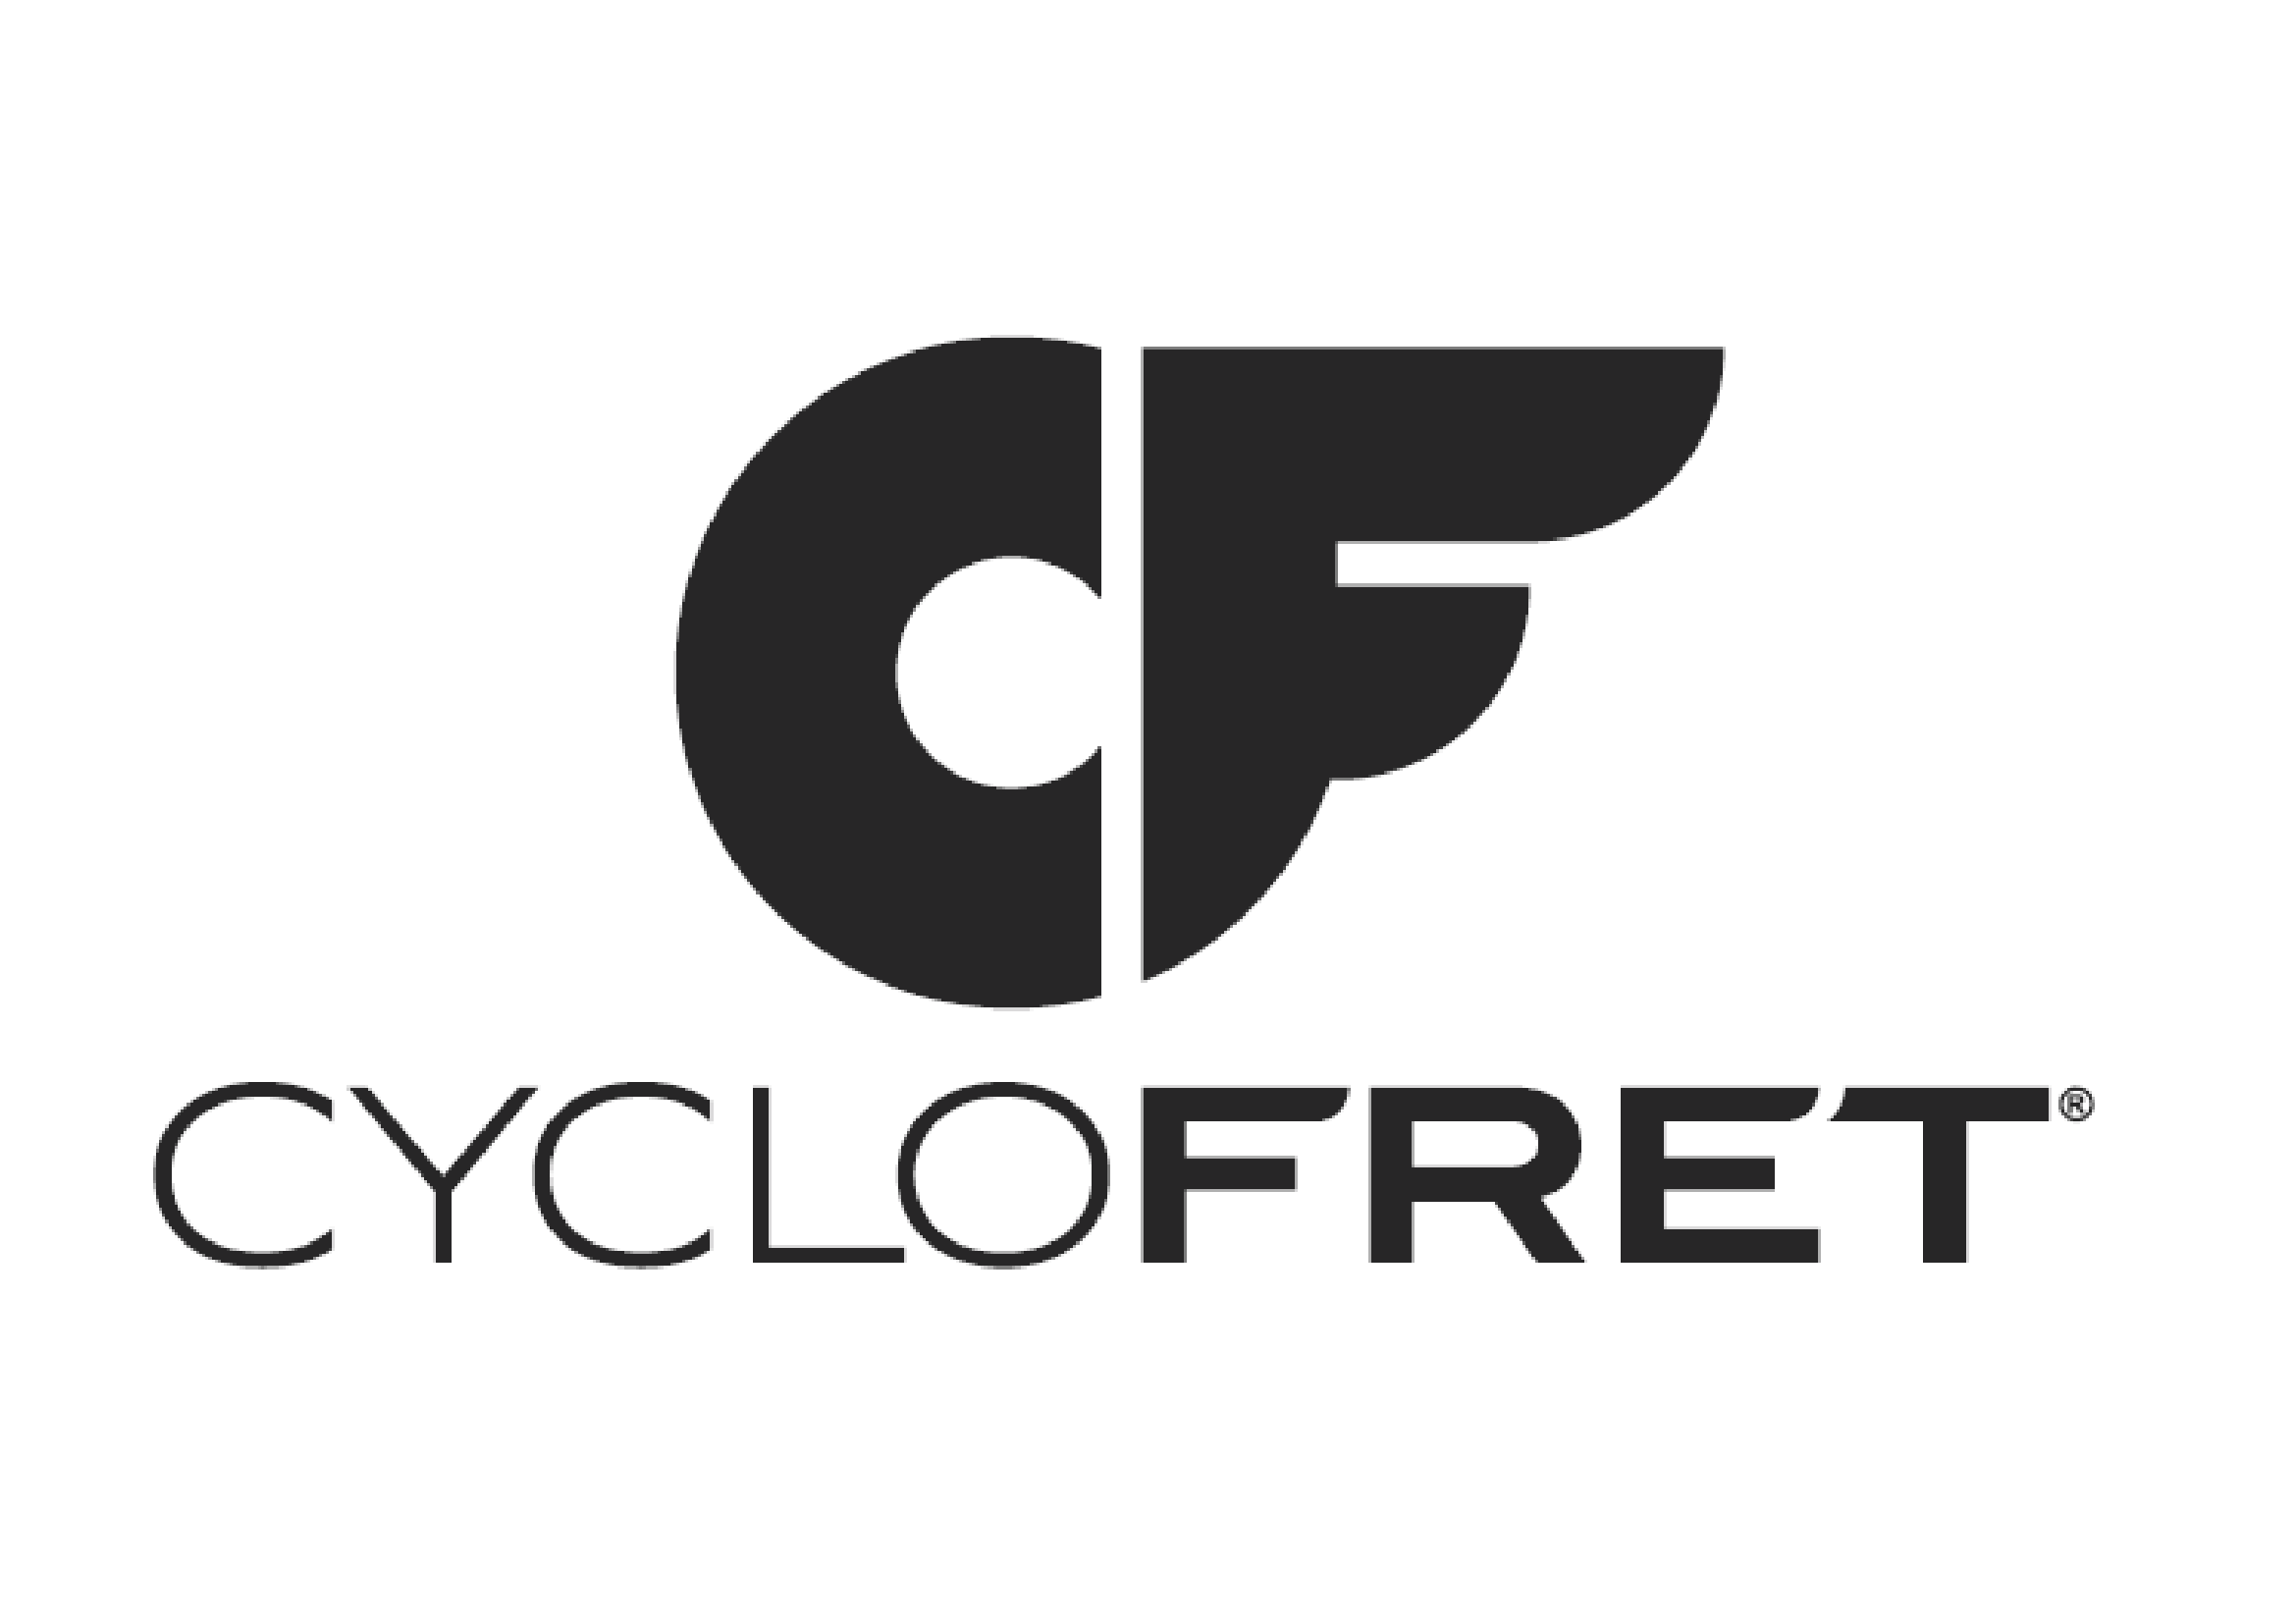 Cyclofret